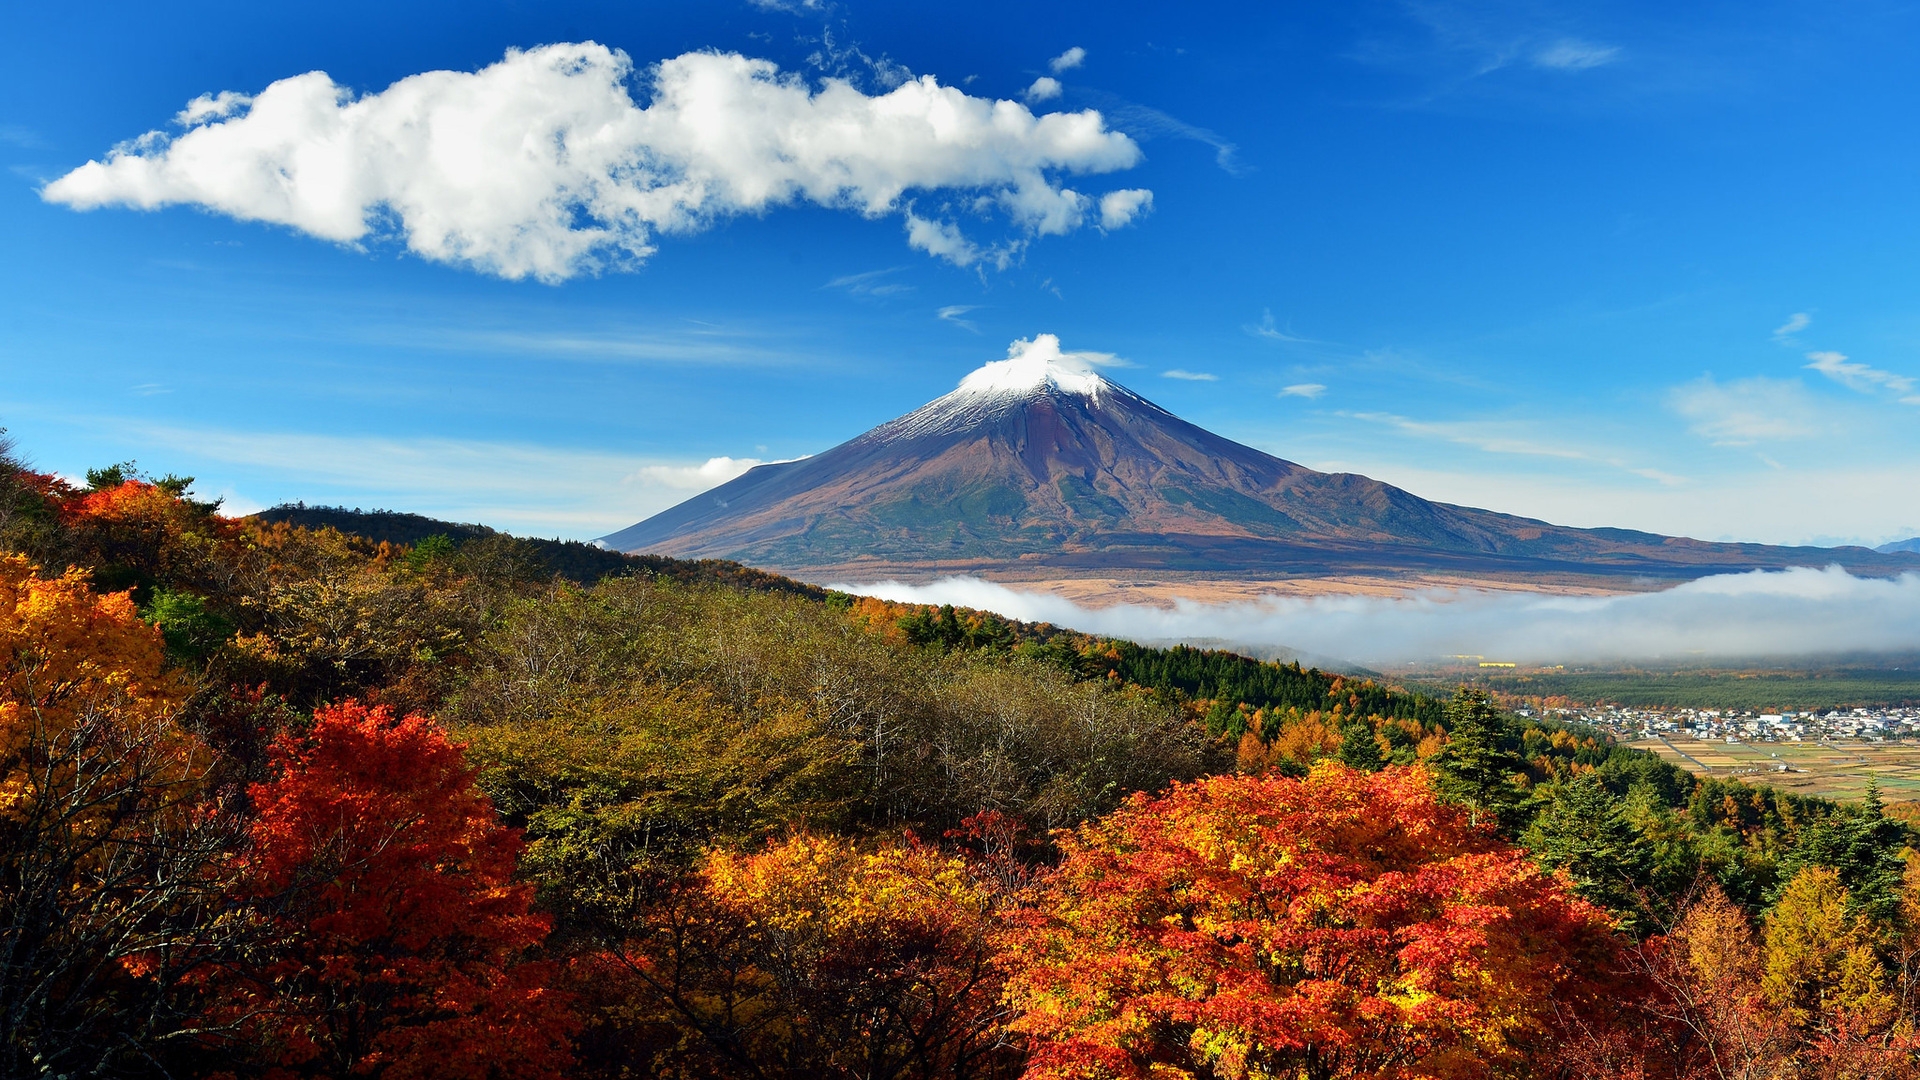 Mount Fuji Japan for 1920 x 1080 HDTV 1080p resolution